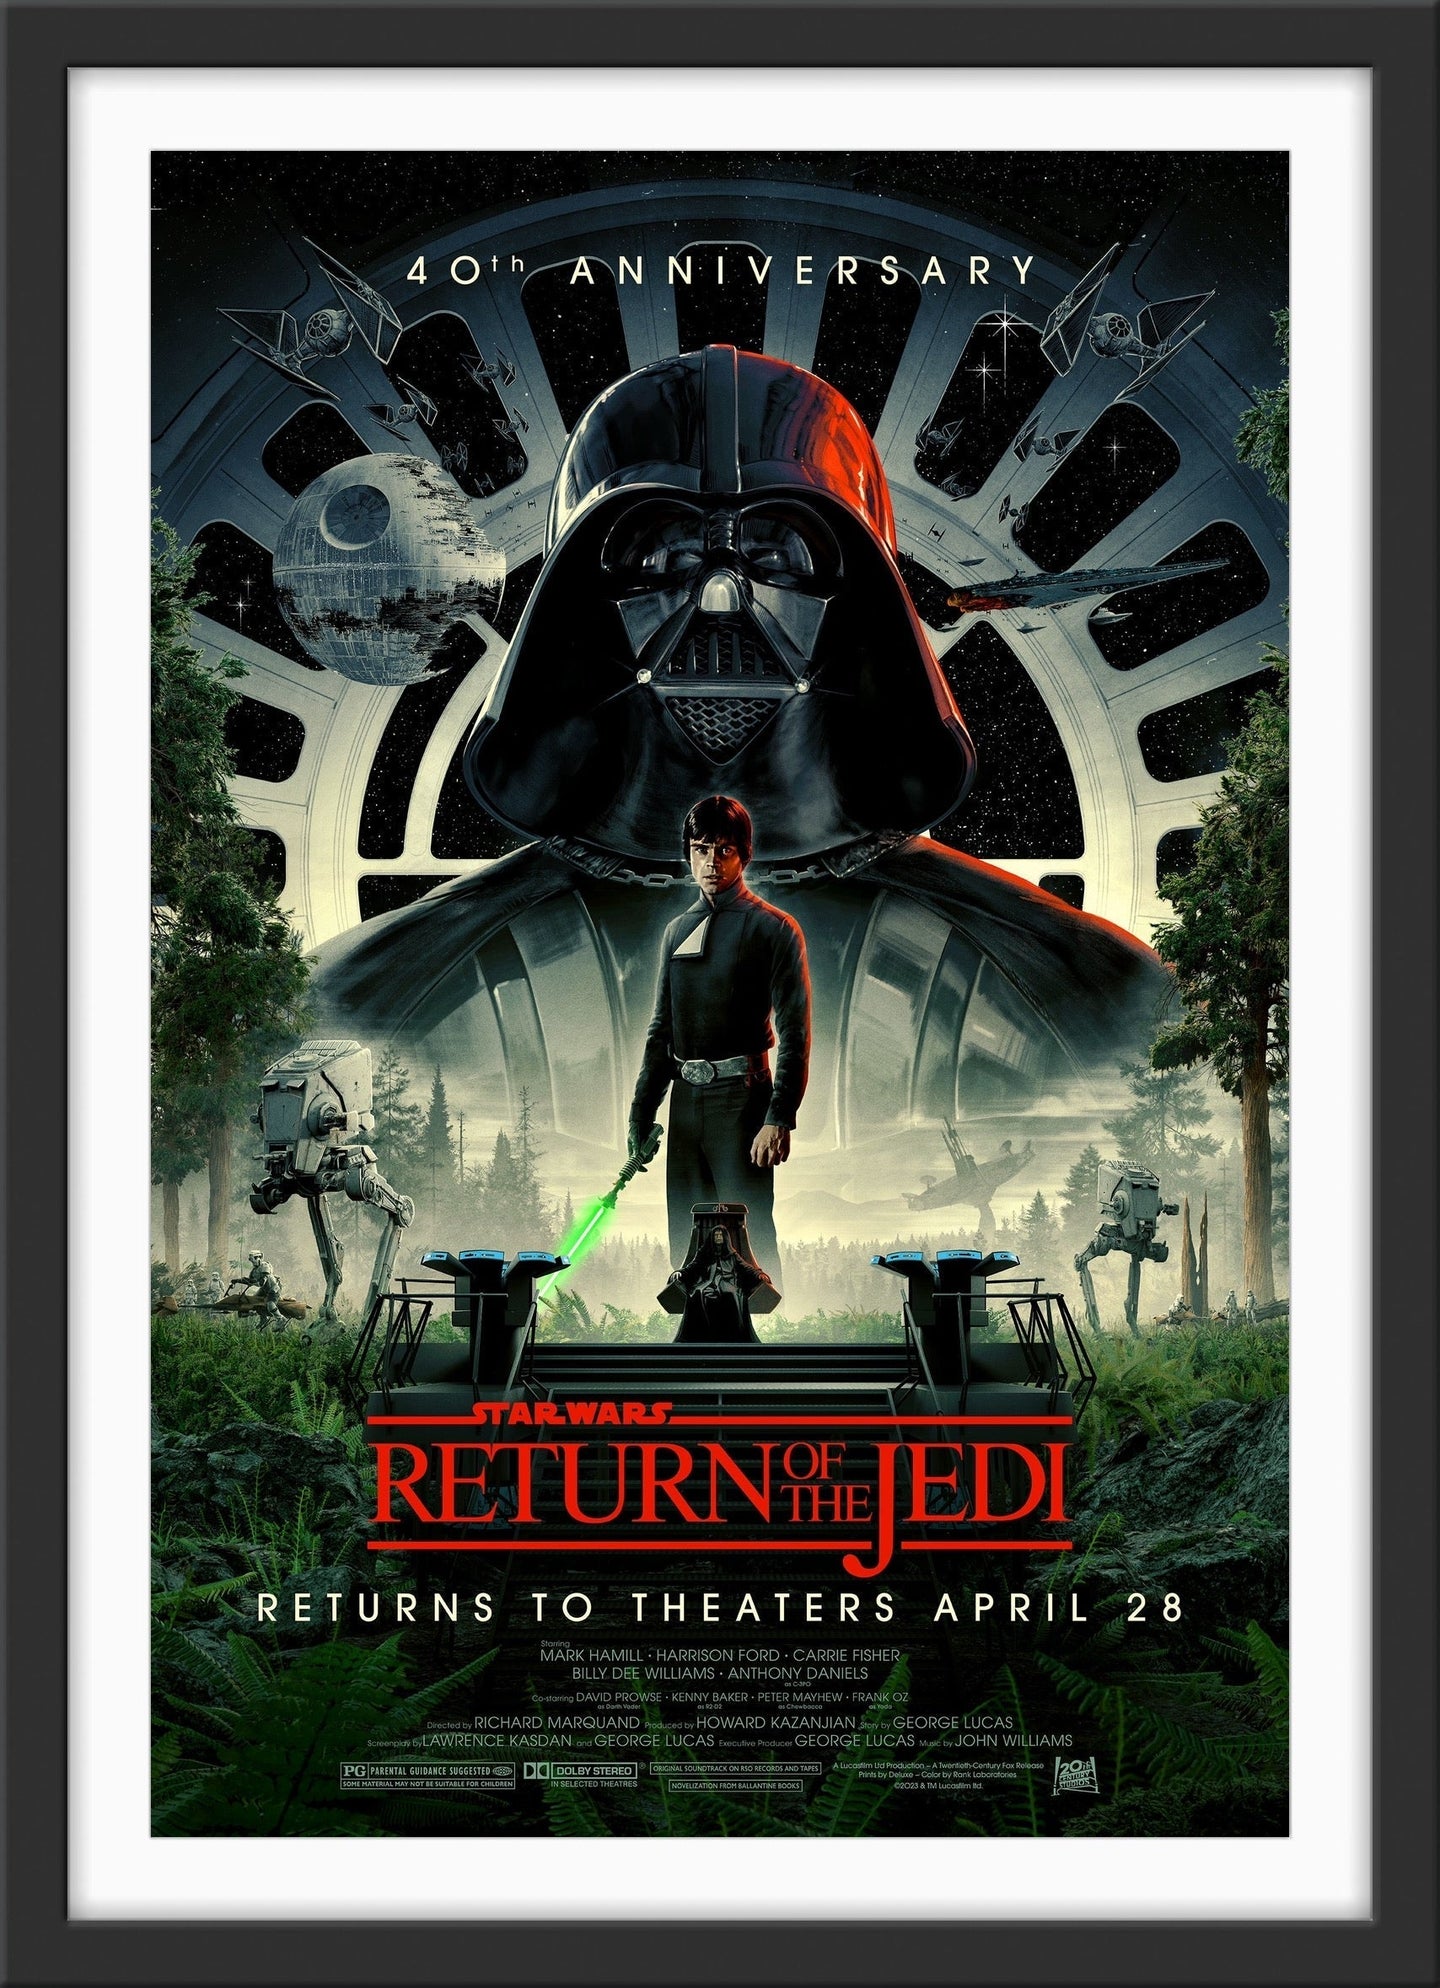 An original 40th anniversary movie poster for the Star Wars film Return of the Jedi with art by Matt Ferguson